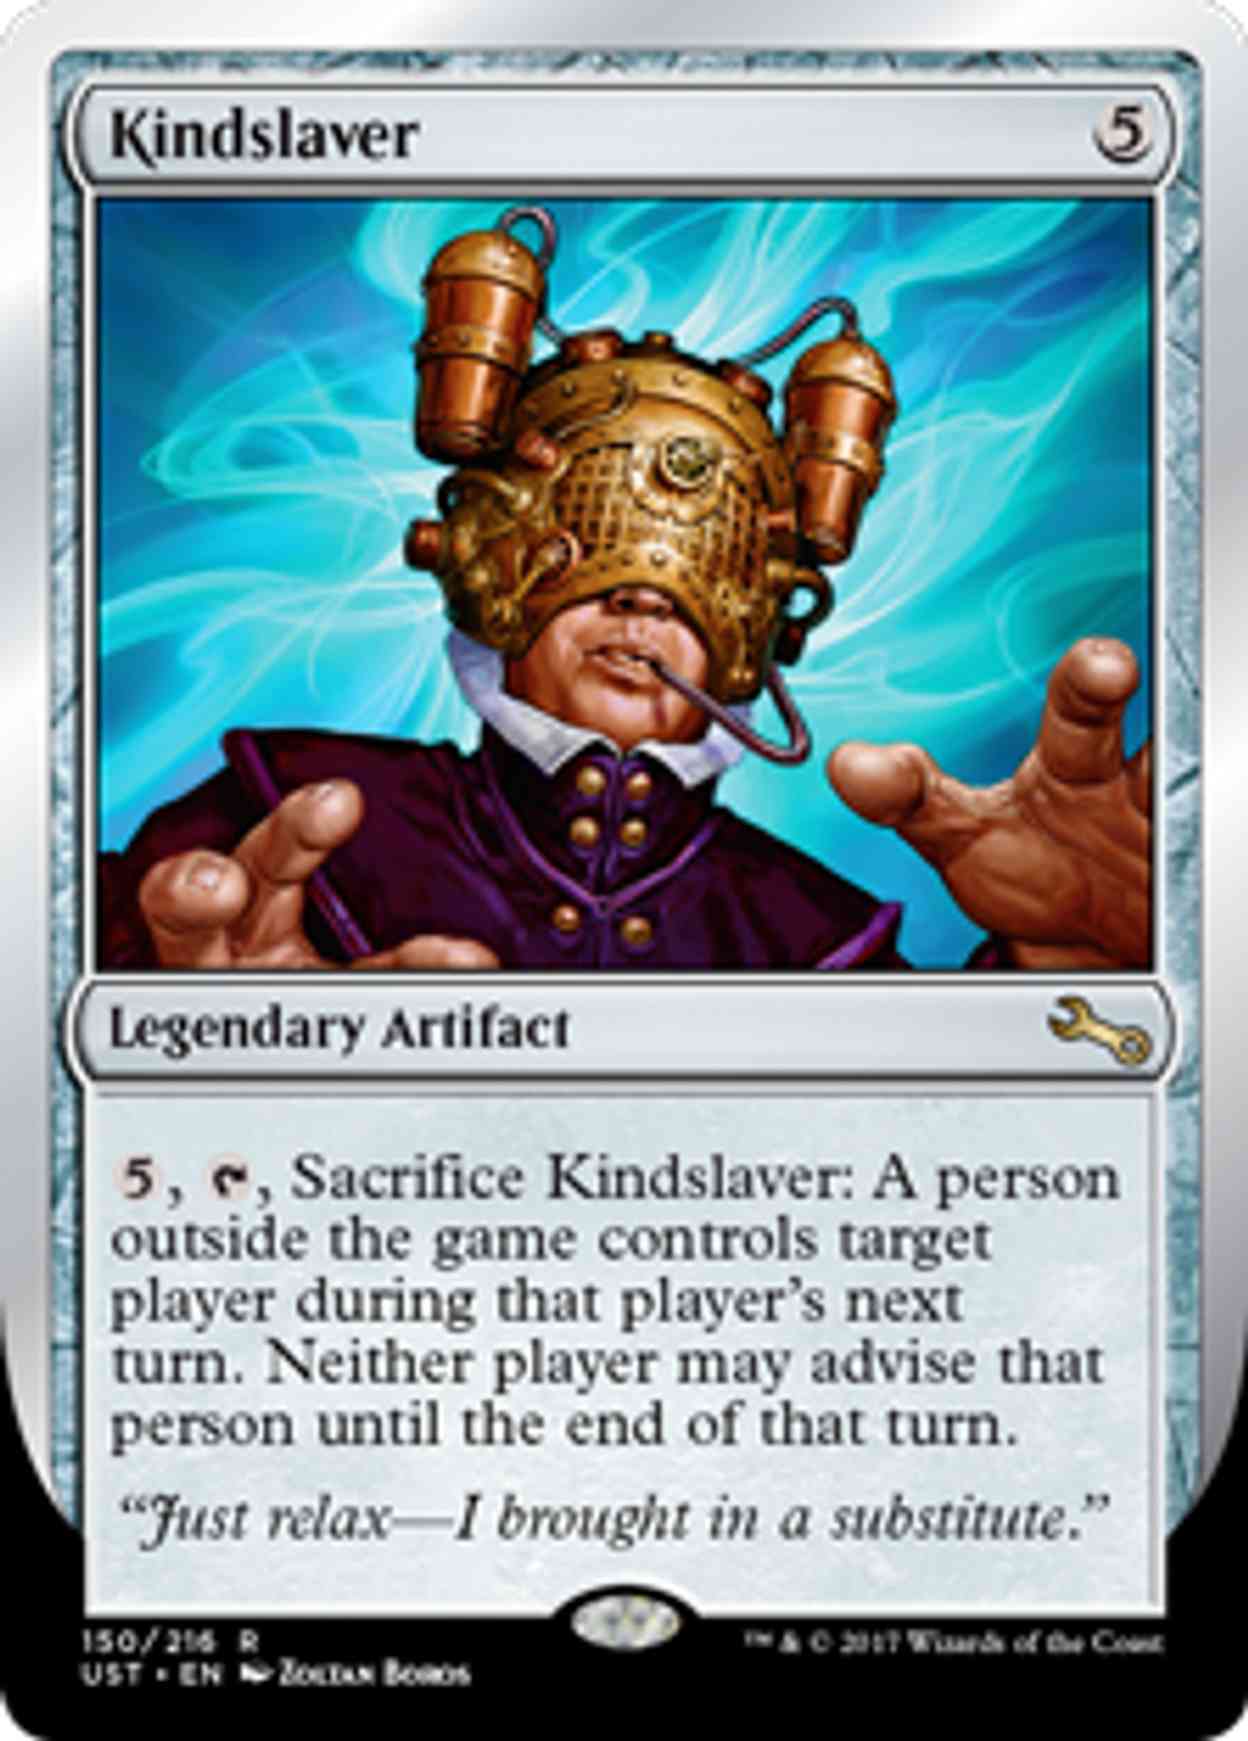 Kindslaver magic card front